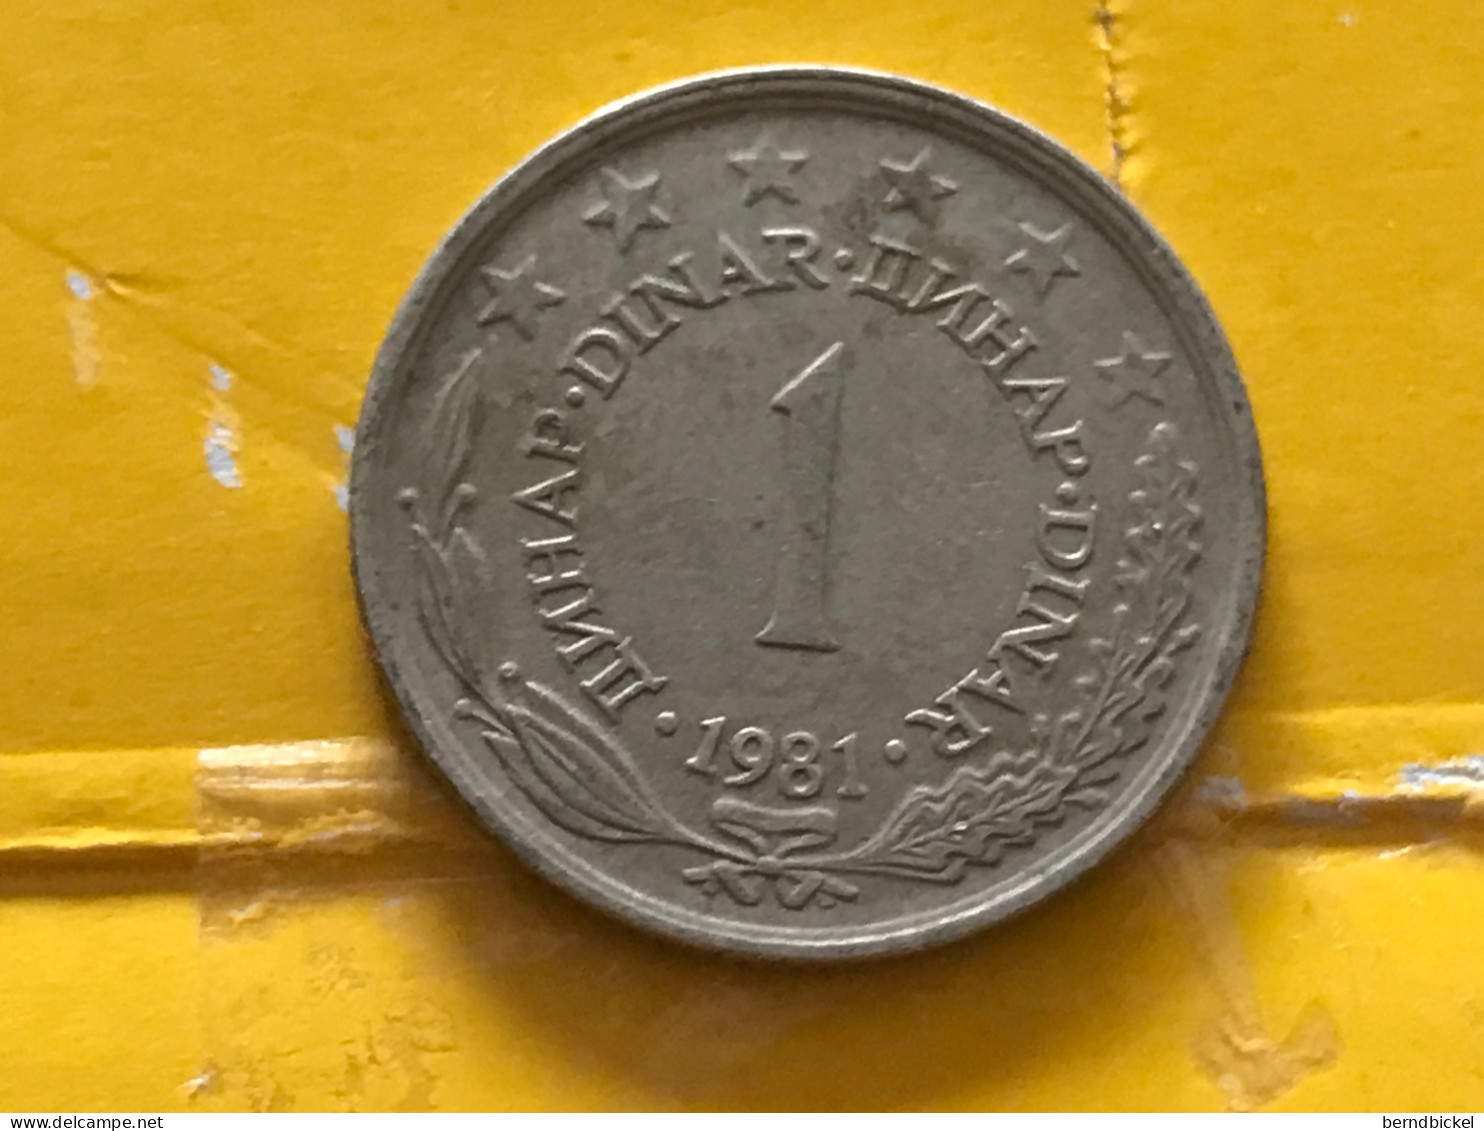 Münze Münzen Umlaufmünze Jugoslawien 1 Dinar 1981 - Jugoslawien